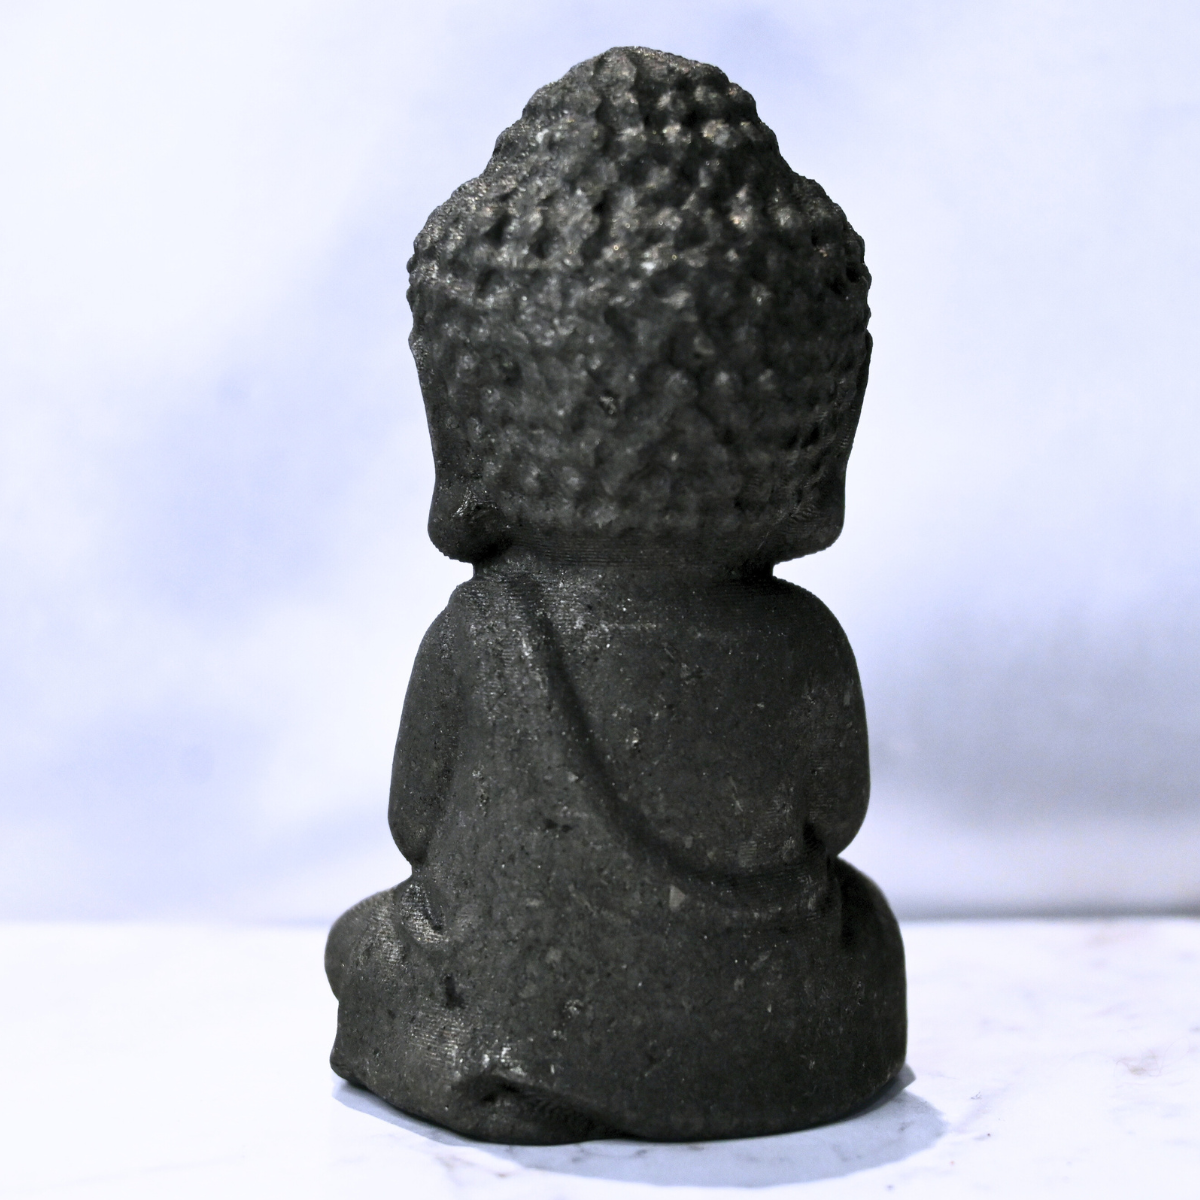 Shungite (Petrovsky Shungite) Buddha Carving - 7 cm tall